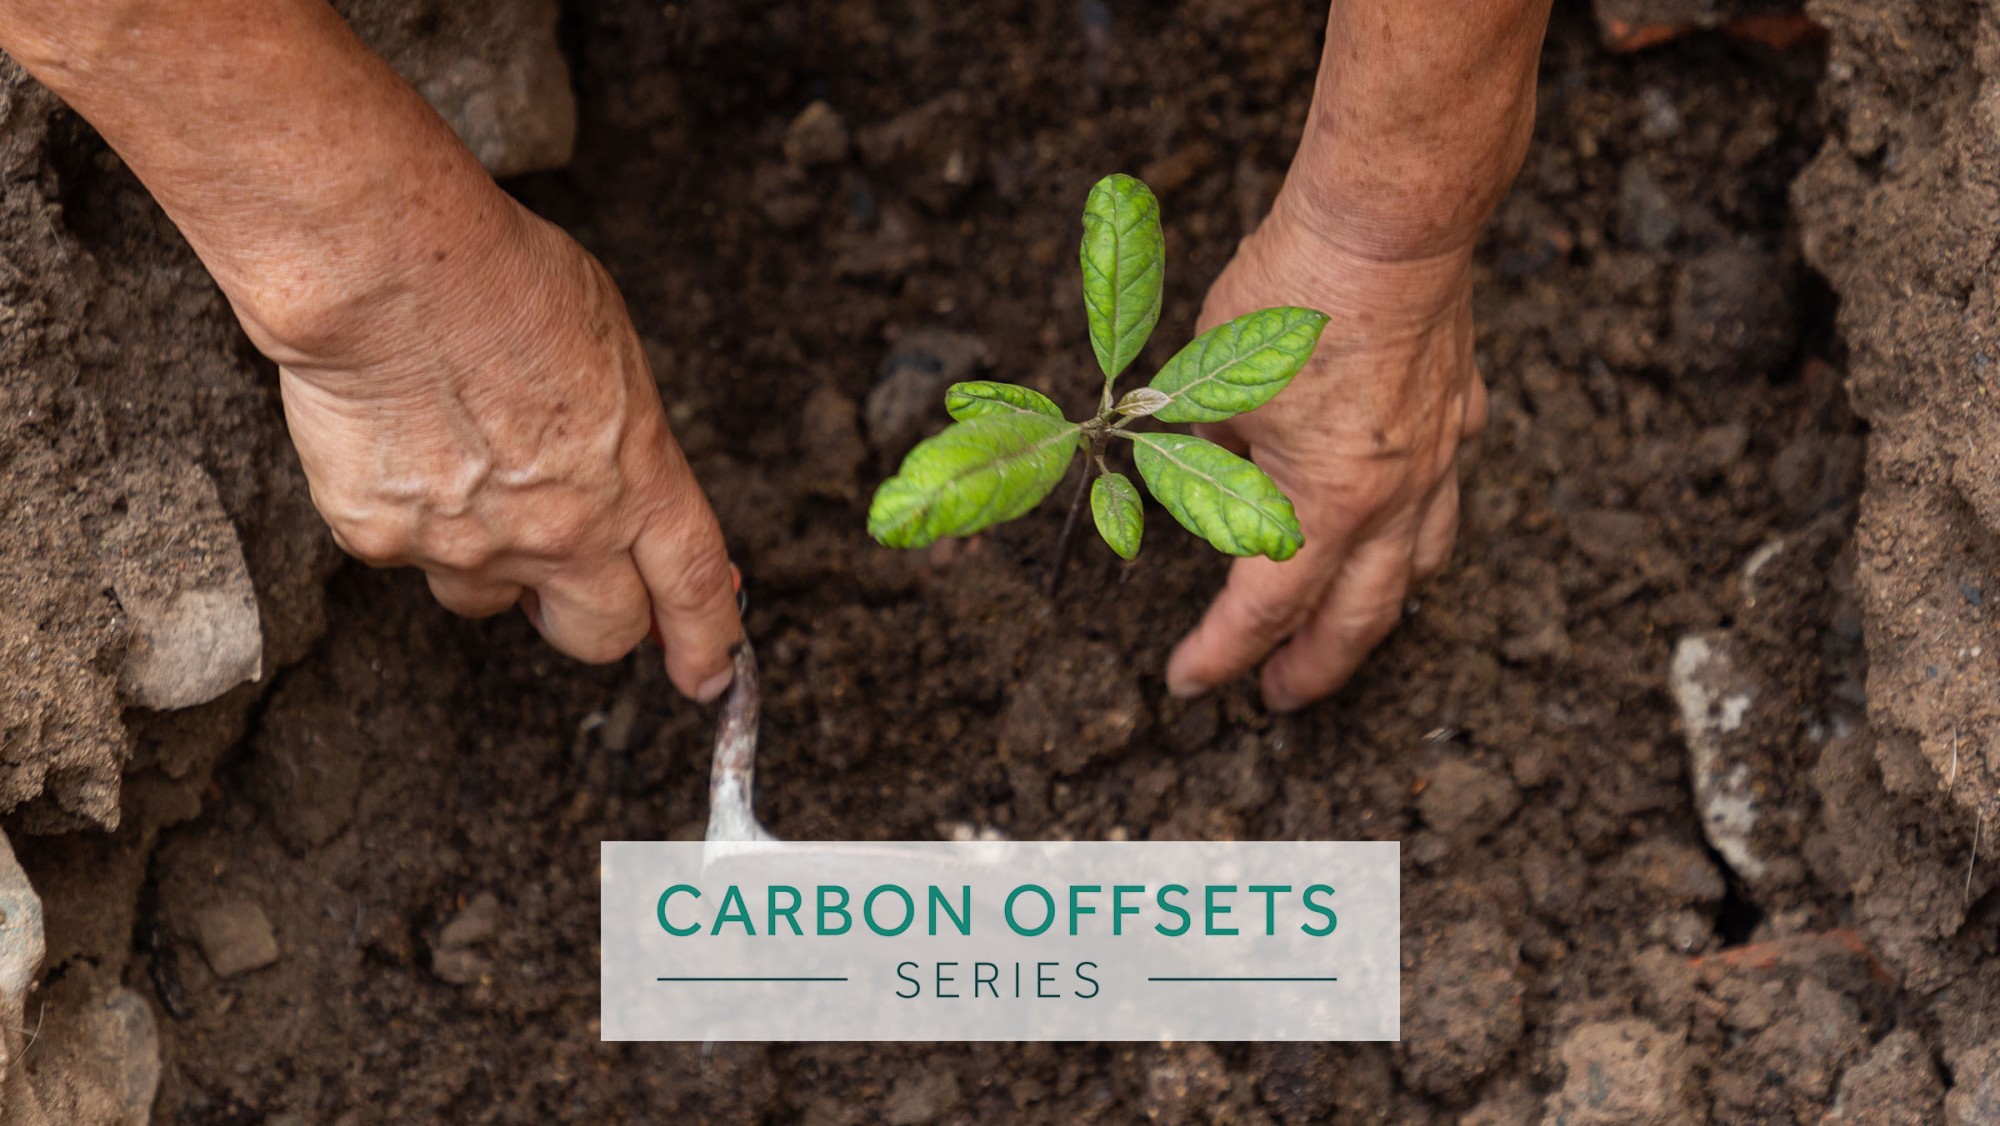 Understanding Carbon Offsets